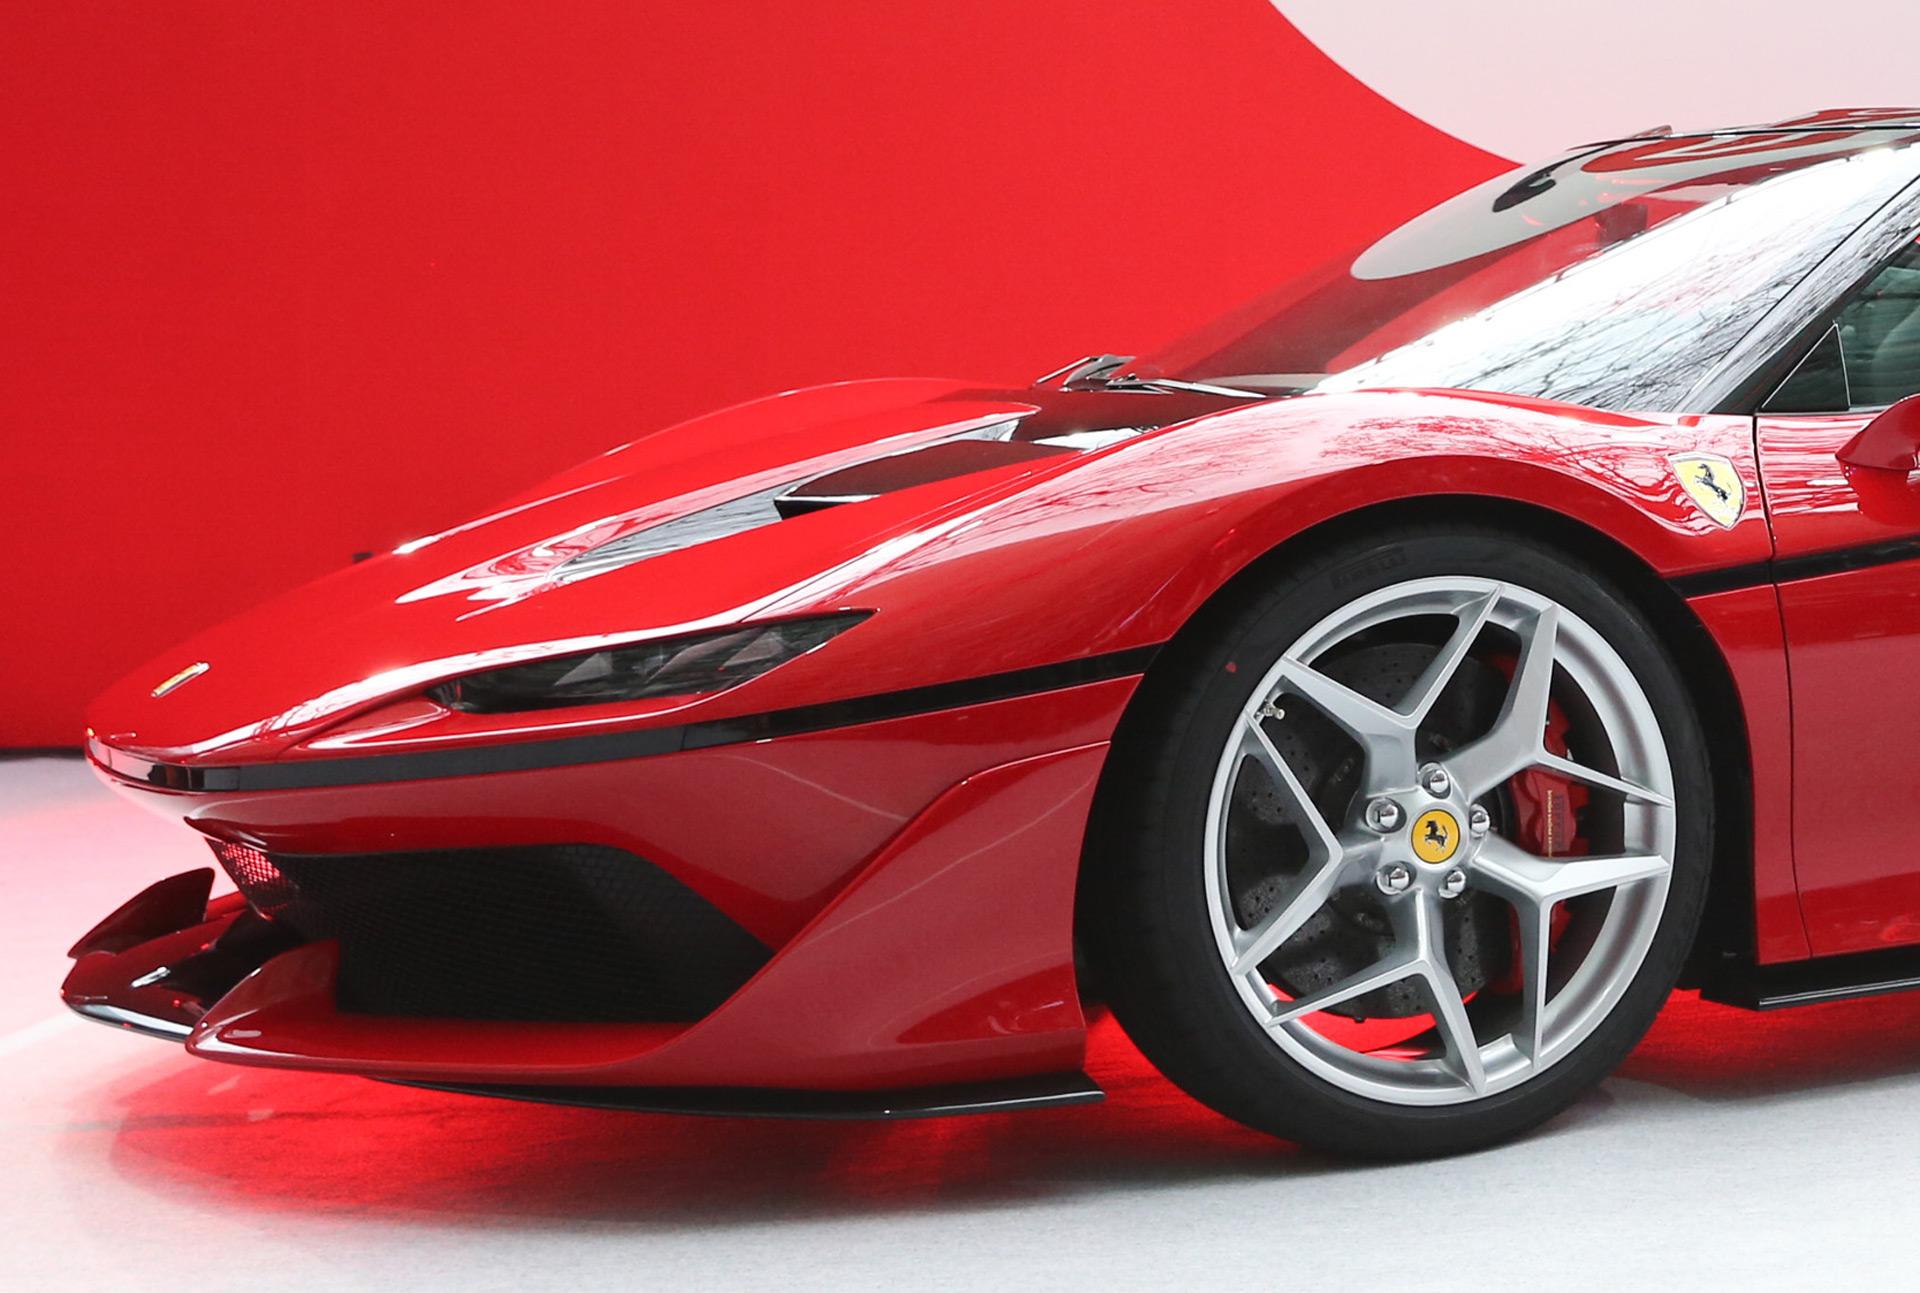 Ferrari J50 might be 'blueprint' for brand's future design